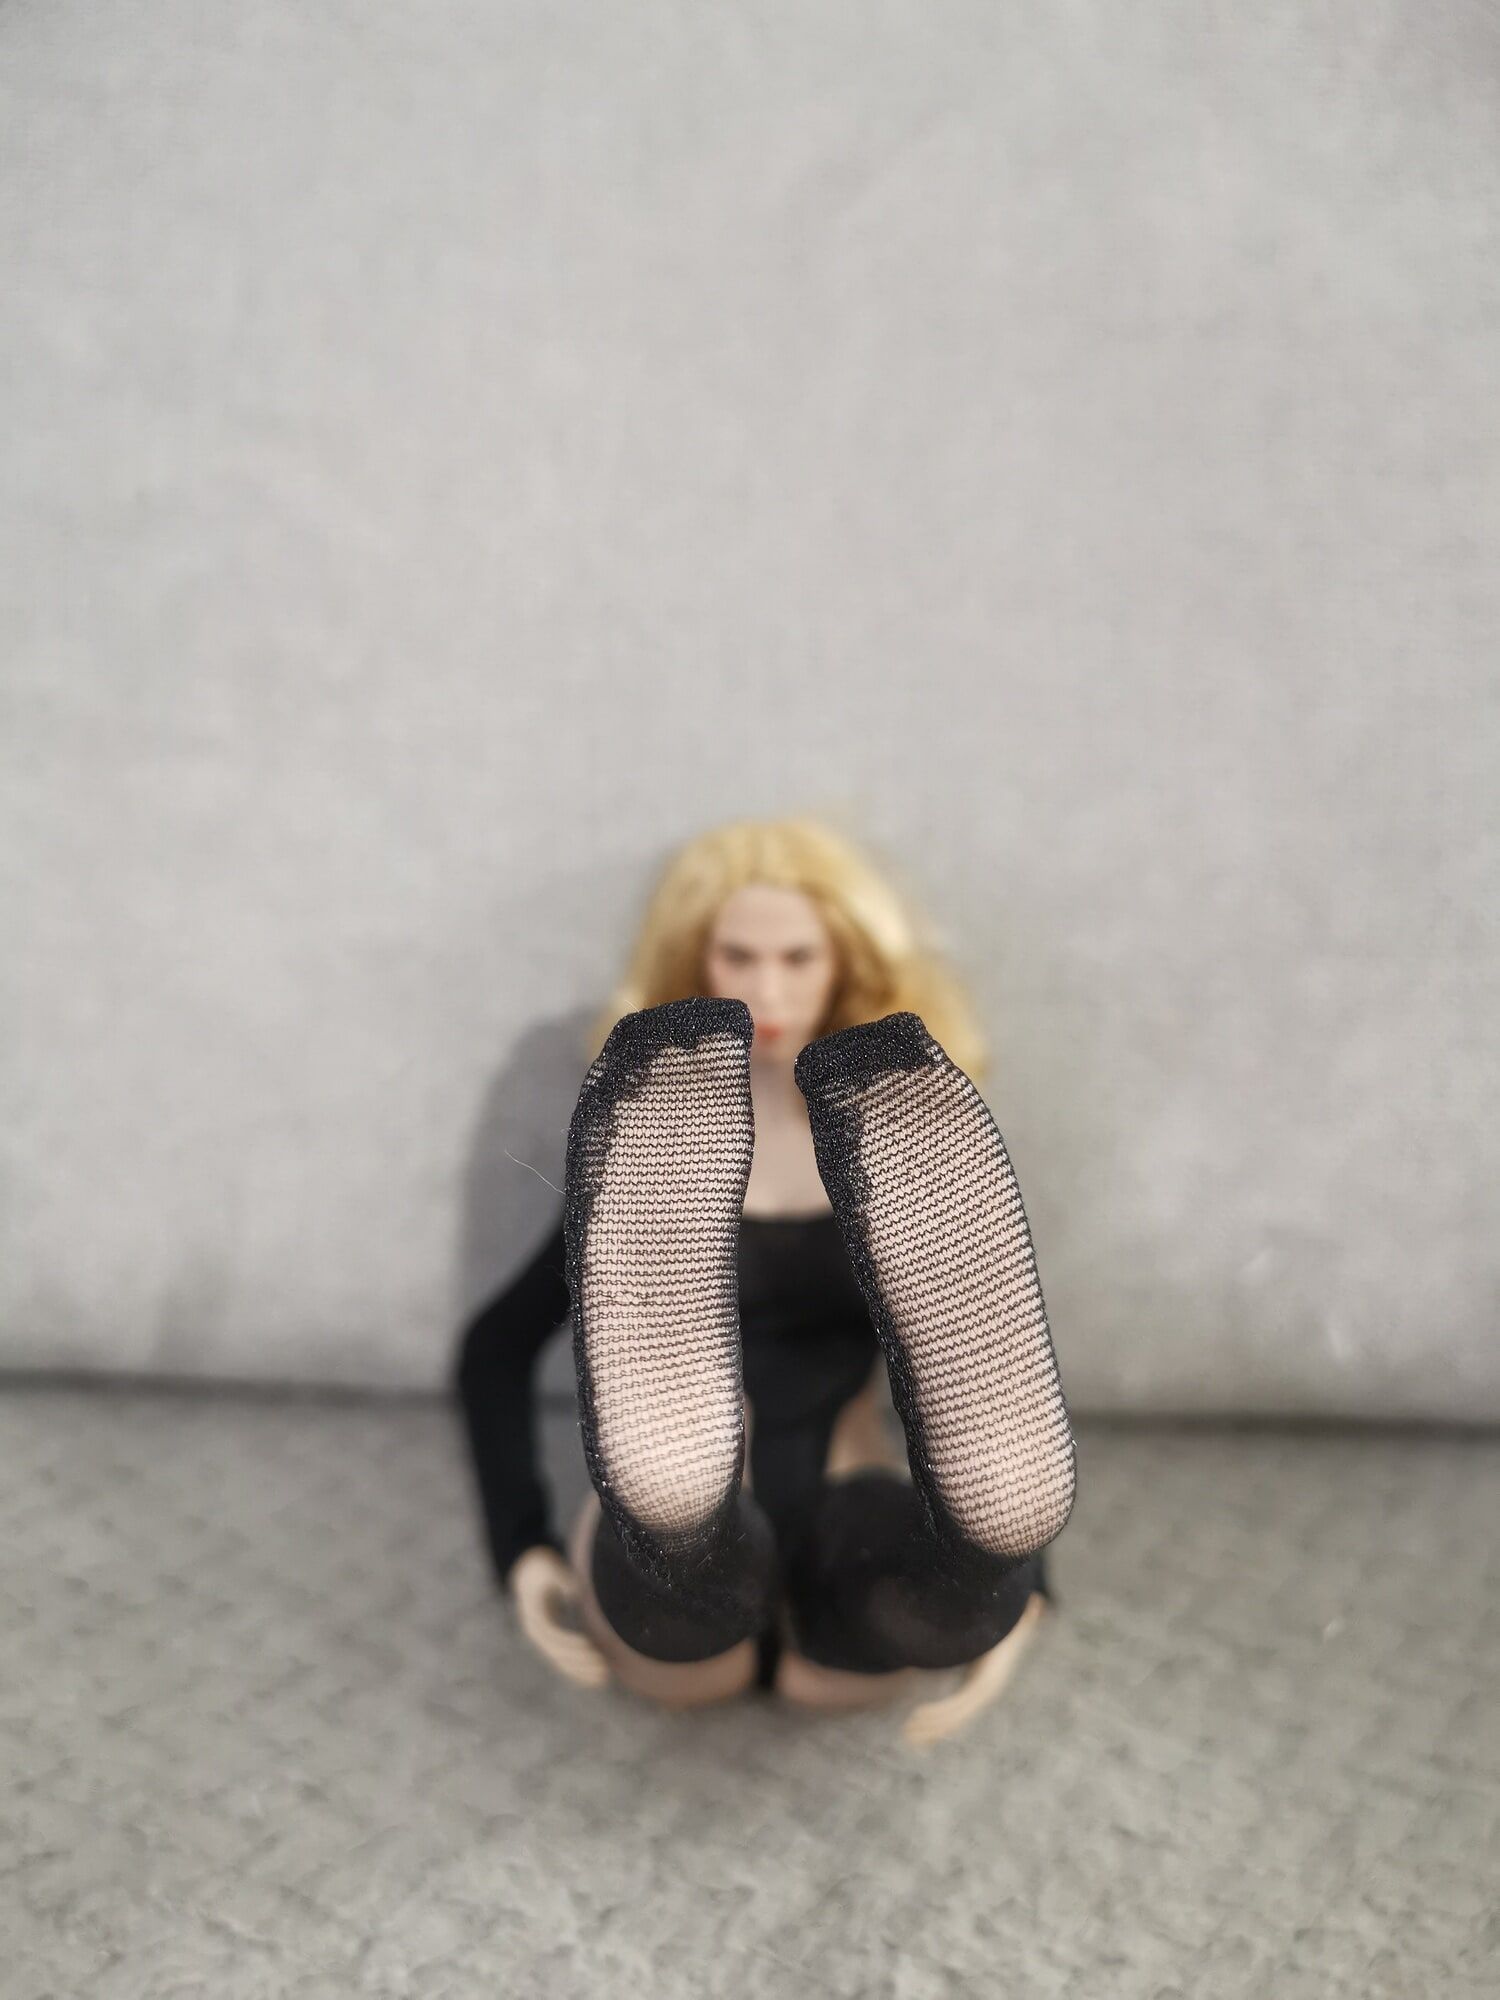 Margo Barbie doll in stockings #16